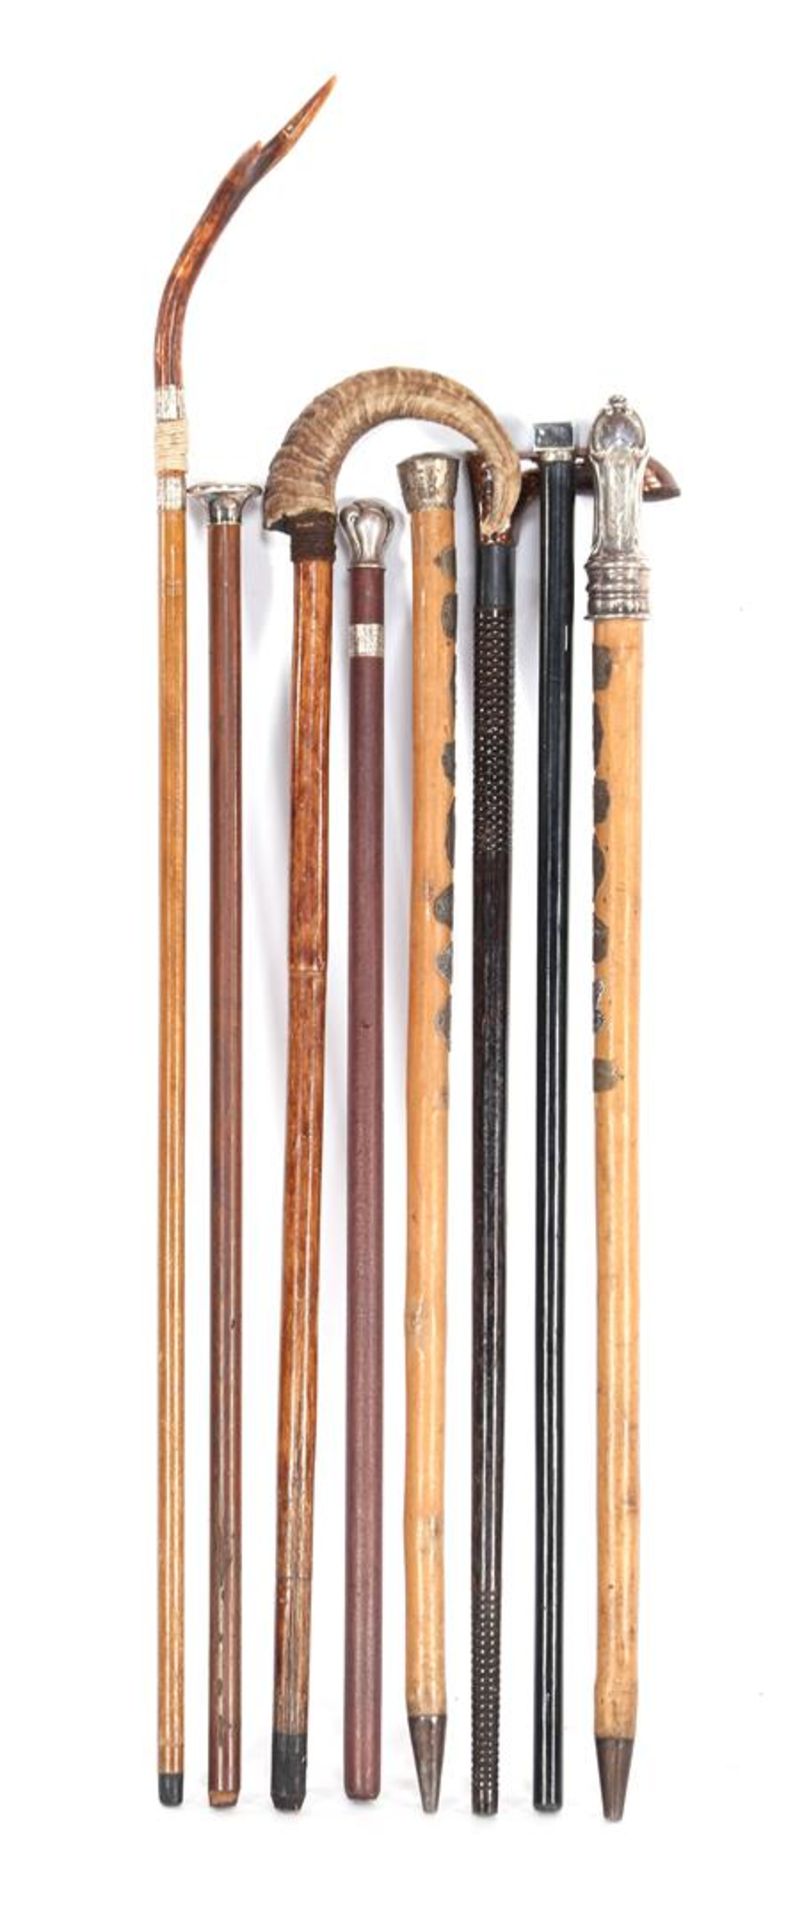 8 wooden walking sticks